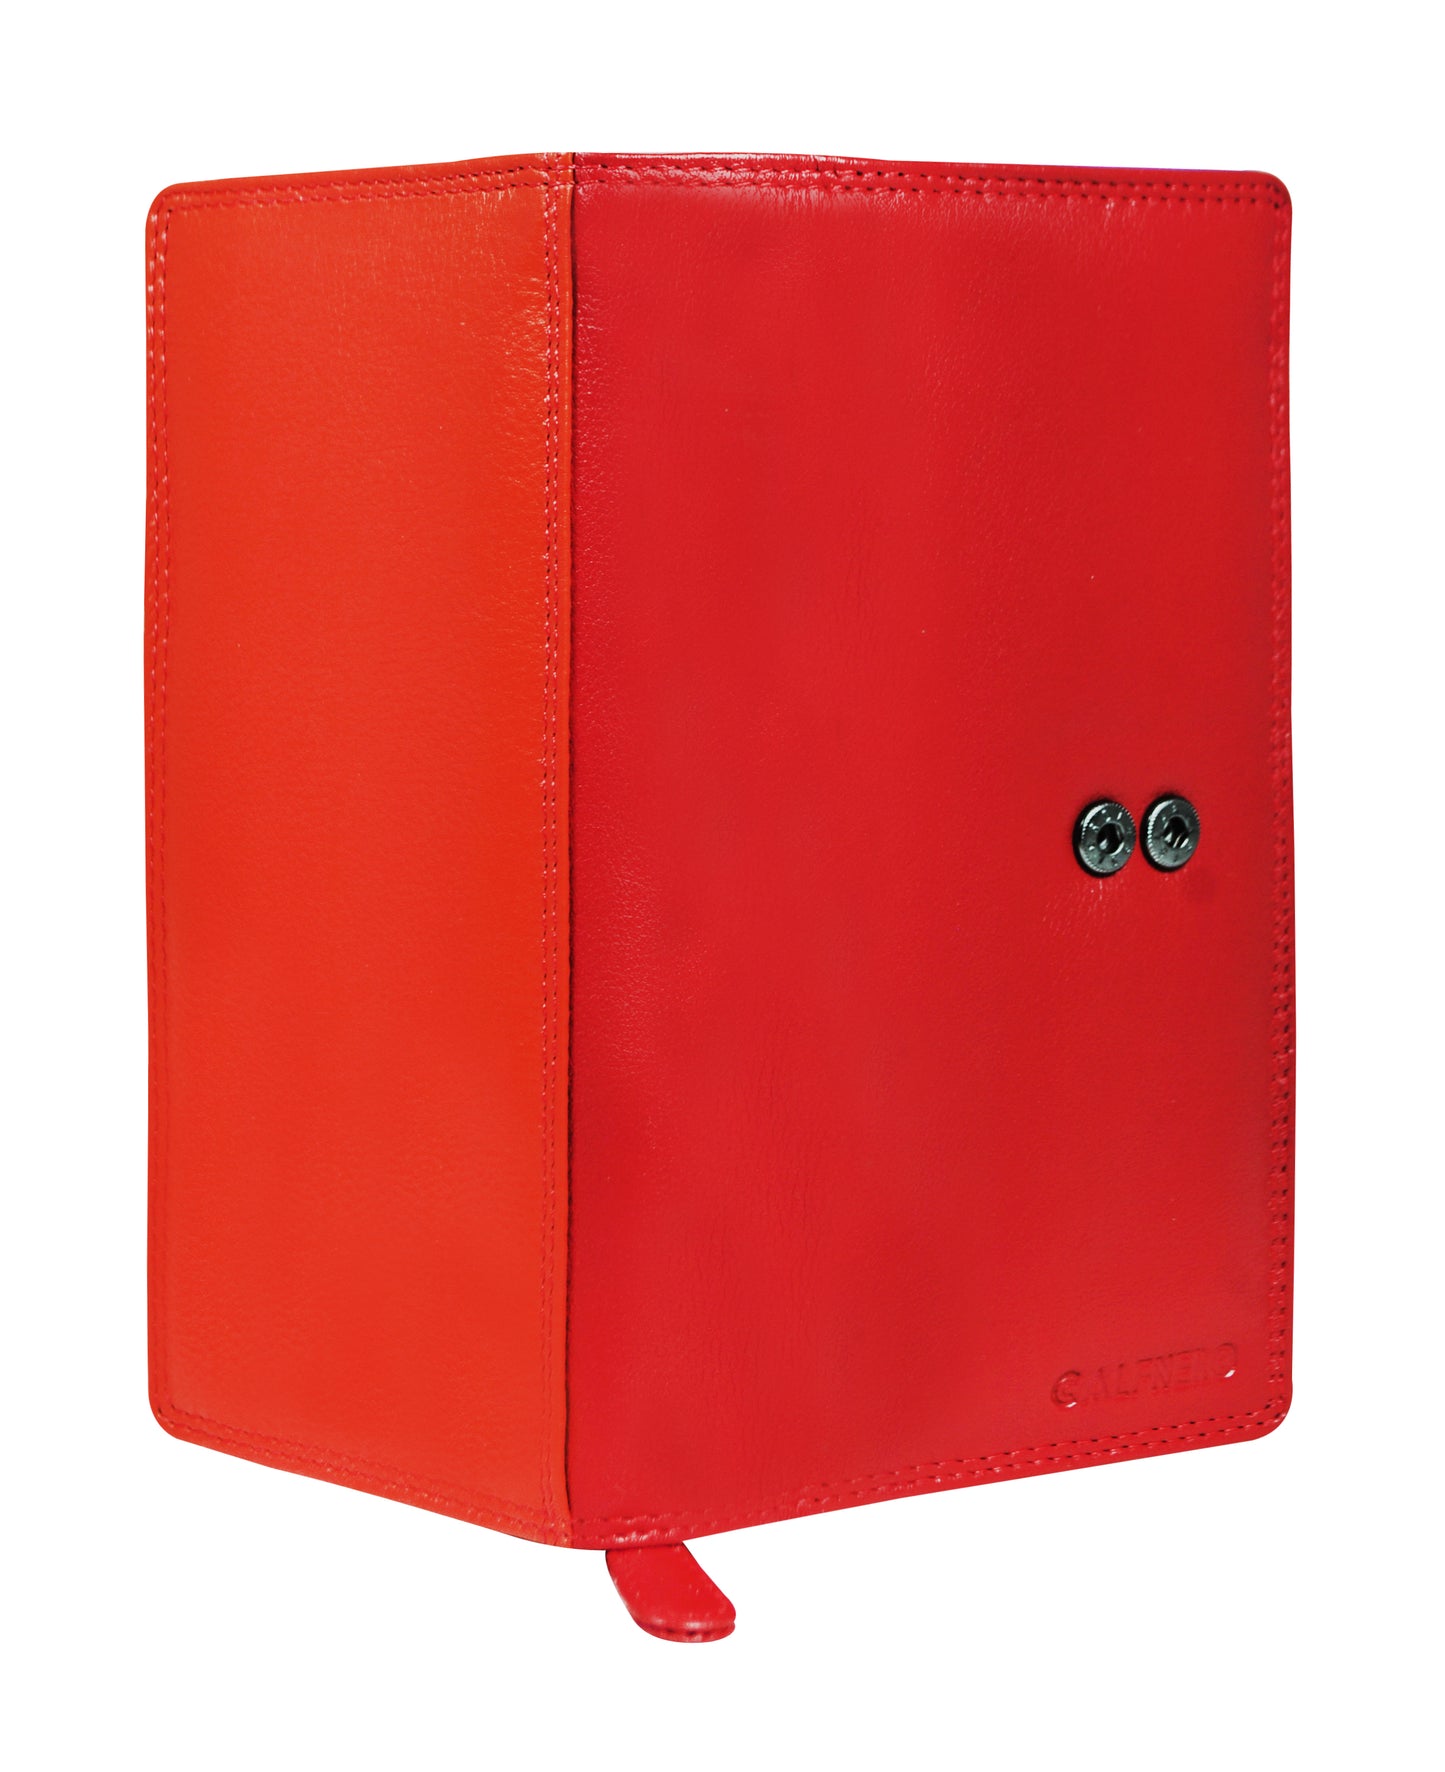 Calfnero Genuine Leather Women's Wallet (6082-Red-Multi)